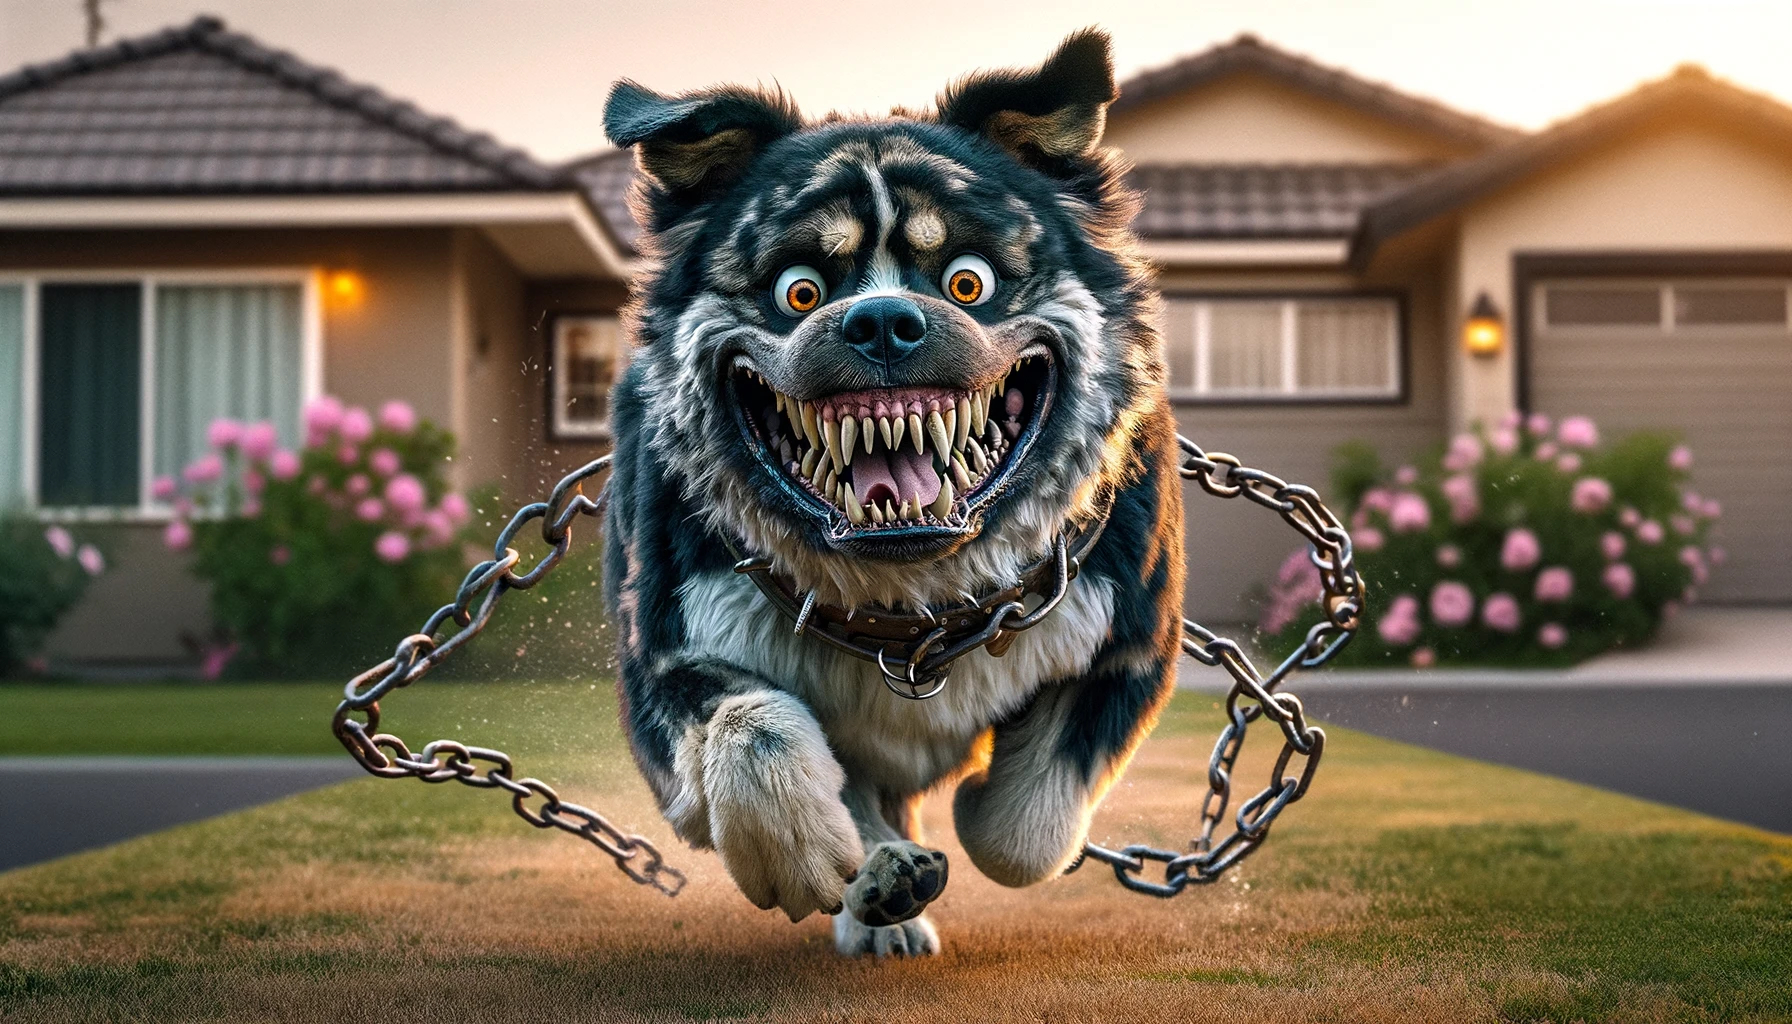 AI-generated cartoony image of a cute yet ferocious dog that has broken its leash 